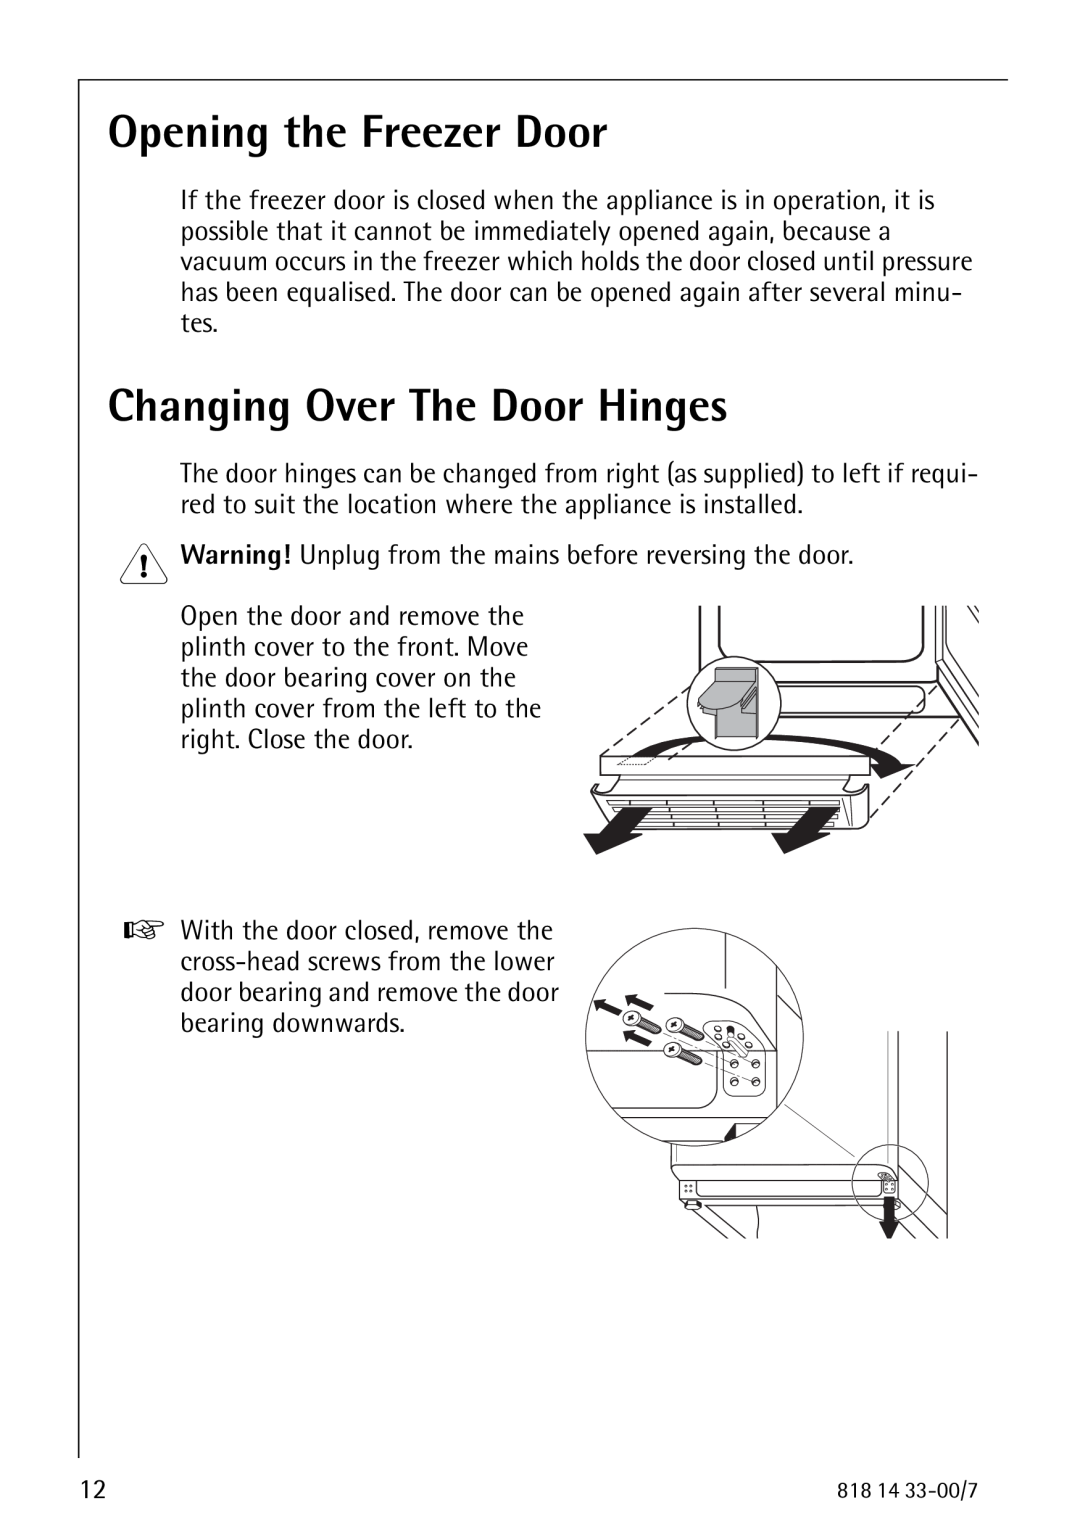 Electrolux 2170-4 operating instructions Opening the Freezer Door, Changing Over The Door Hinges 